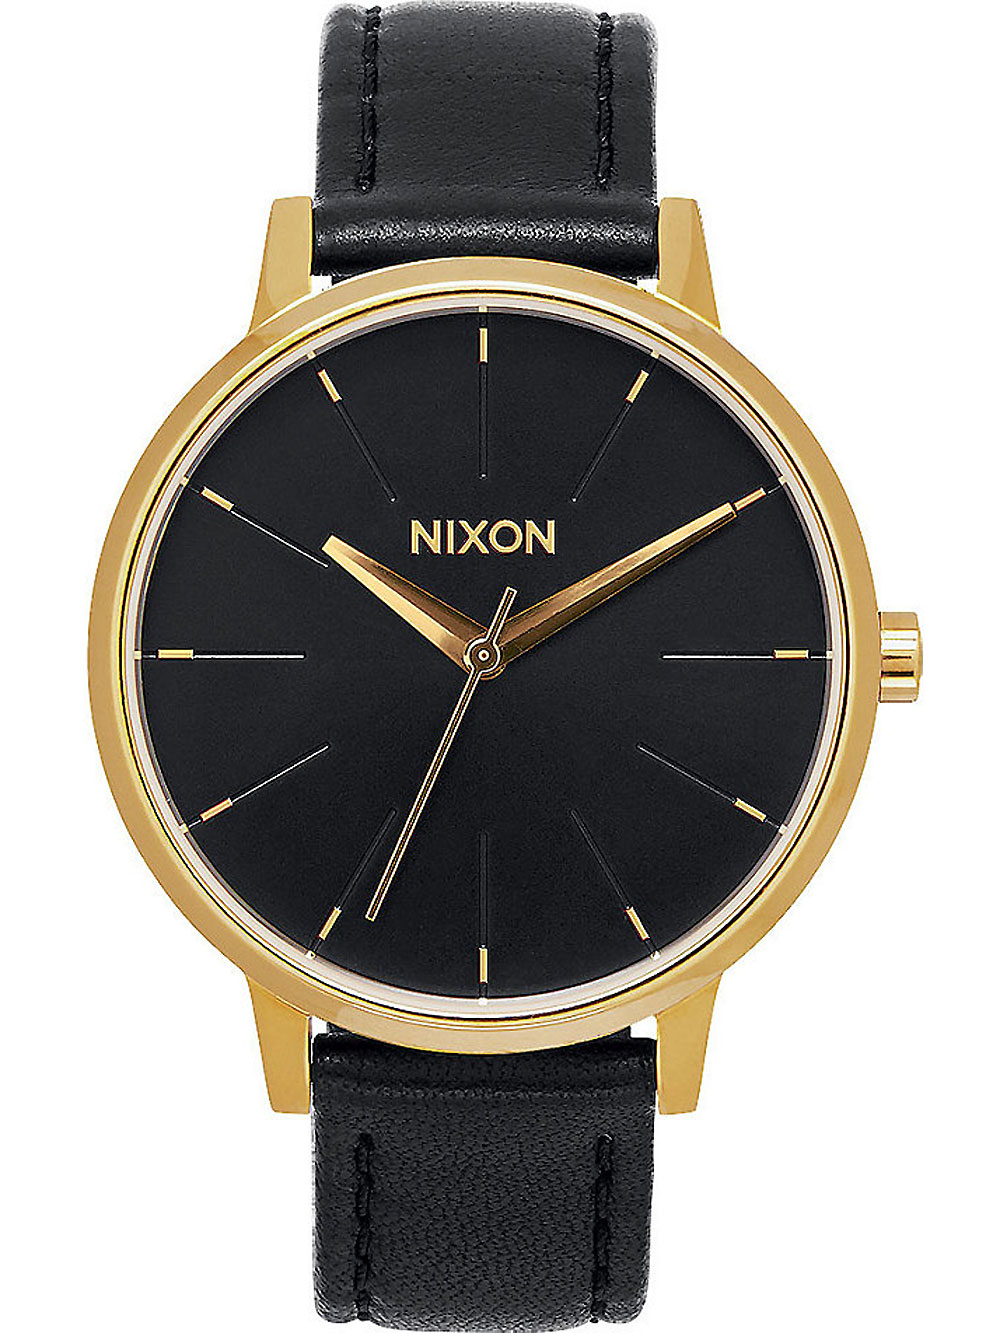 NIXON A108-513 Kensington Leather Gold Black 37mm 5ATM